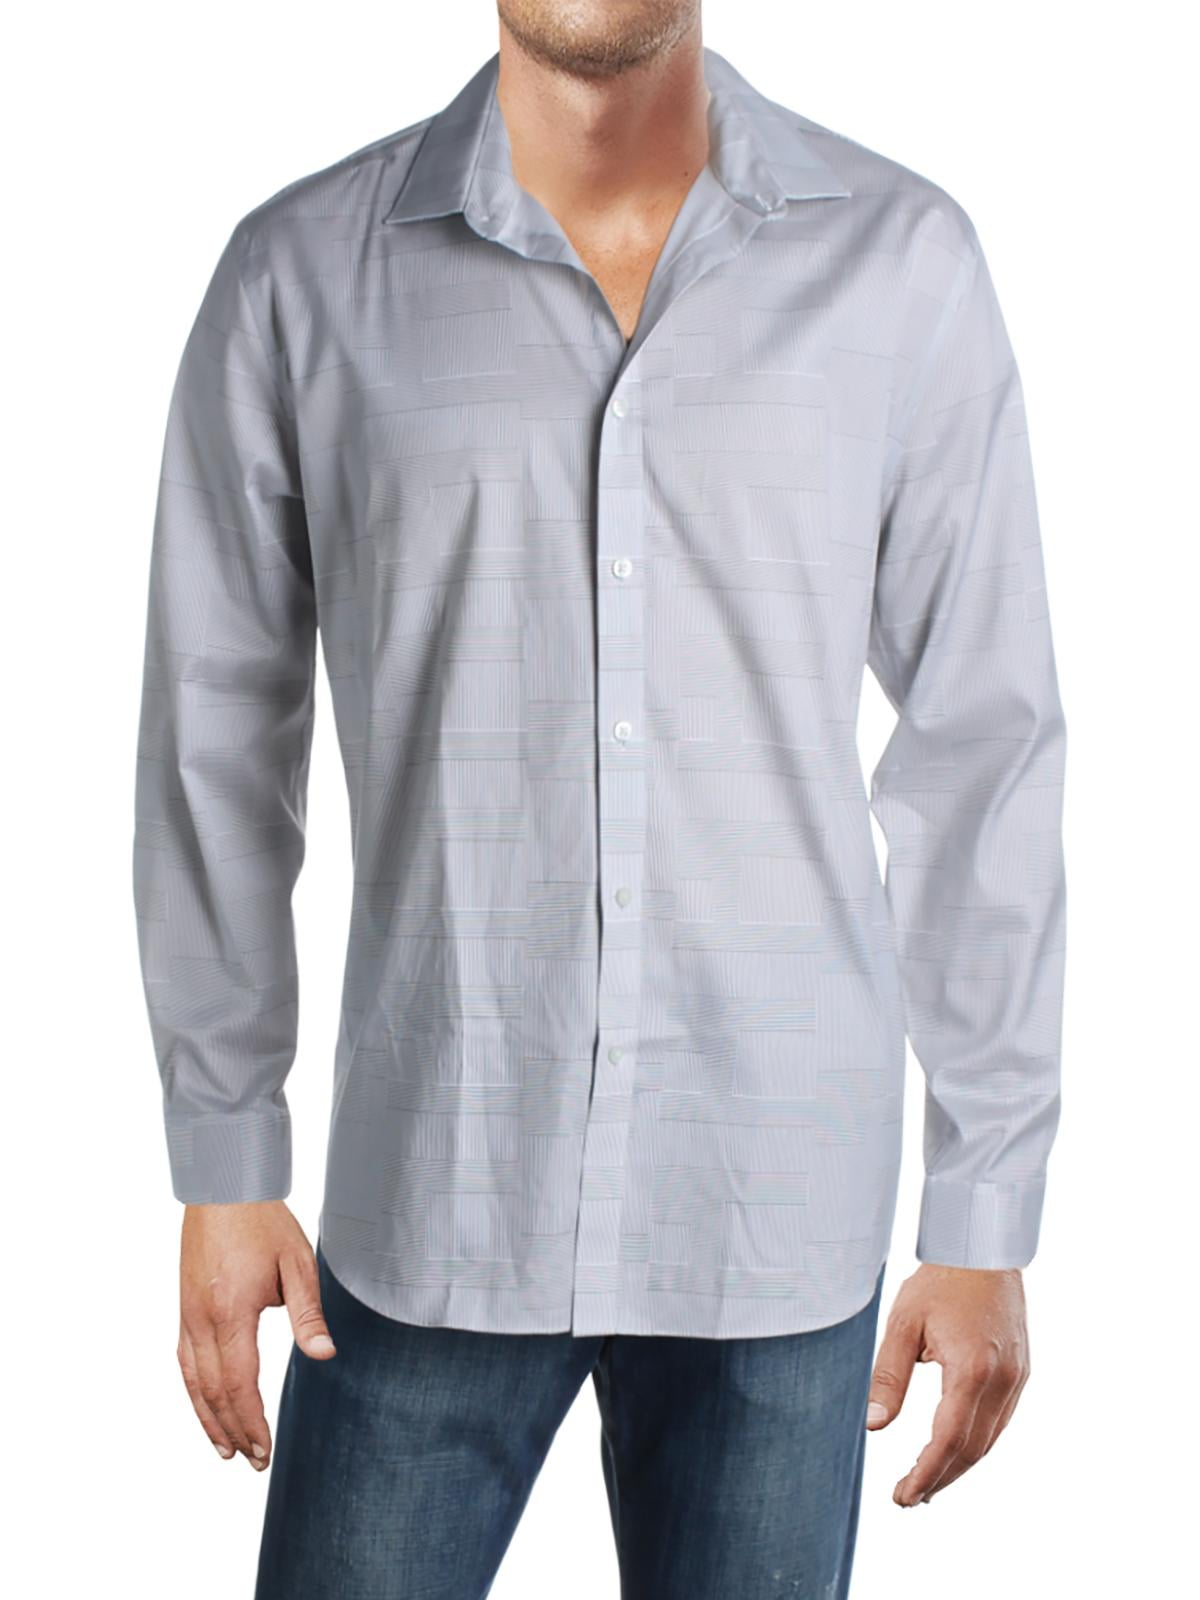 DKNY Mens Striped Short Sleeve Button Down Shirt 